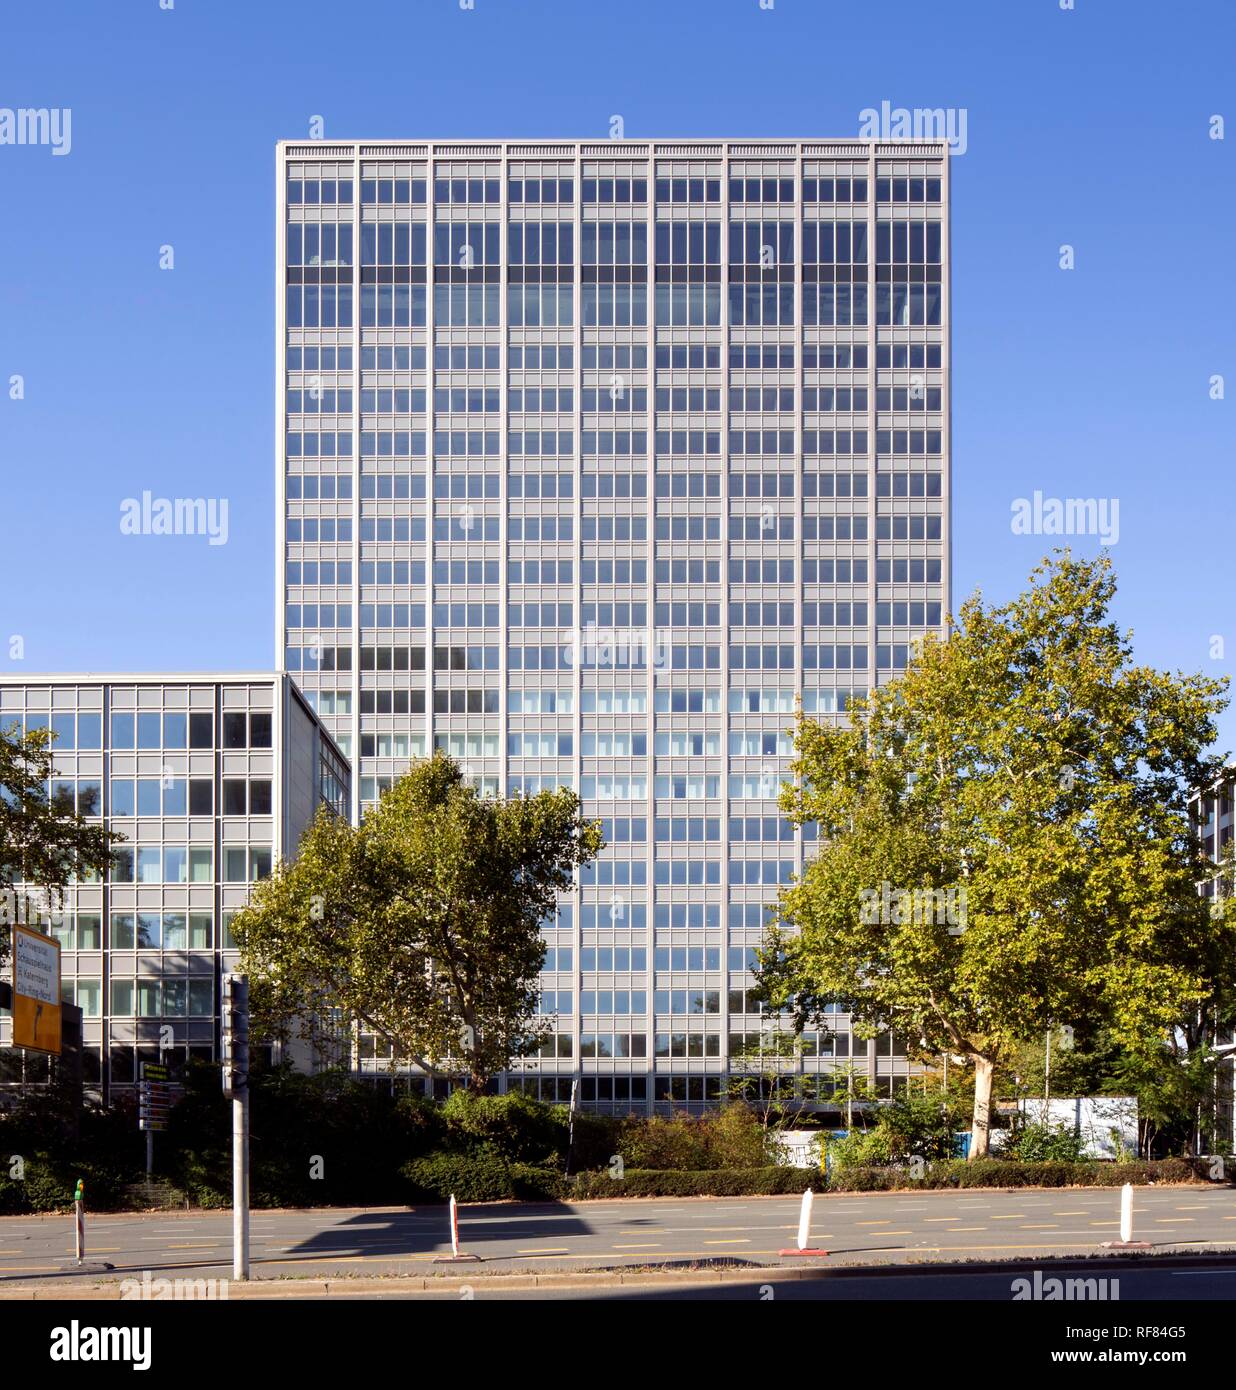 Rheinstahlhaus, torre di uffici del Gruppo ThyssenKrupp, Essen, la zona della Ruhr, Nord Reno-Westfalia, Germania Foto Stock